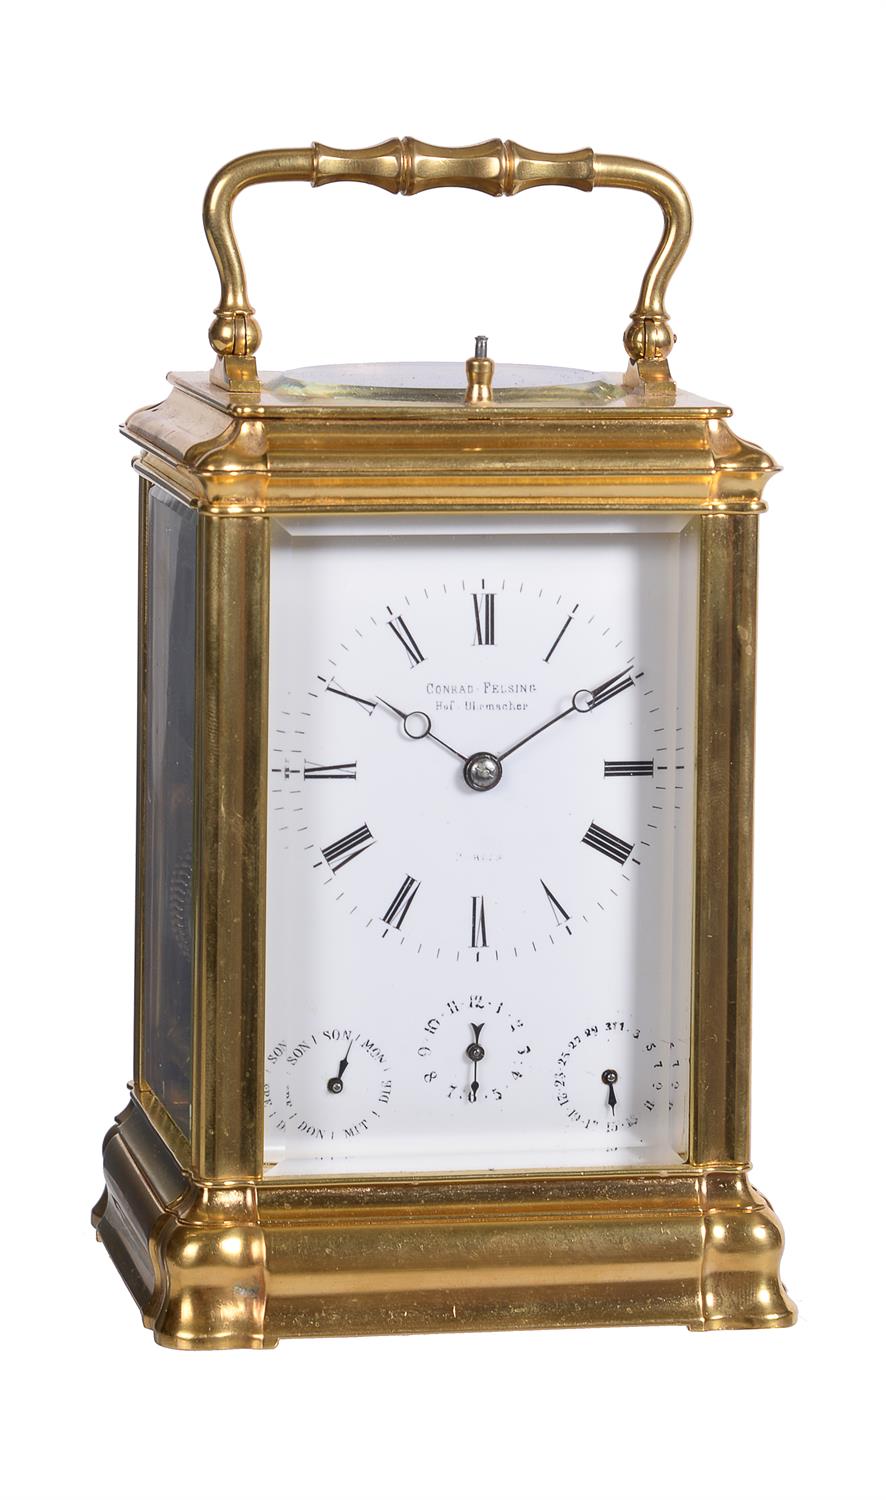 A French gorge calendar carriage clock with alarm, retailed by Conrad Felsing, Berlin, circa 1860